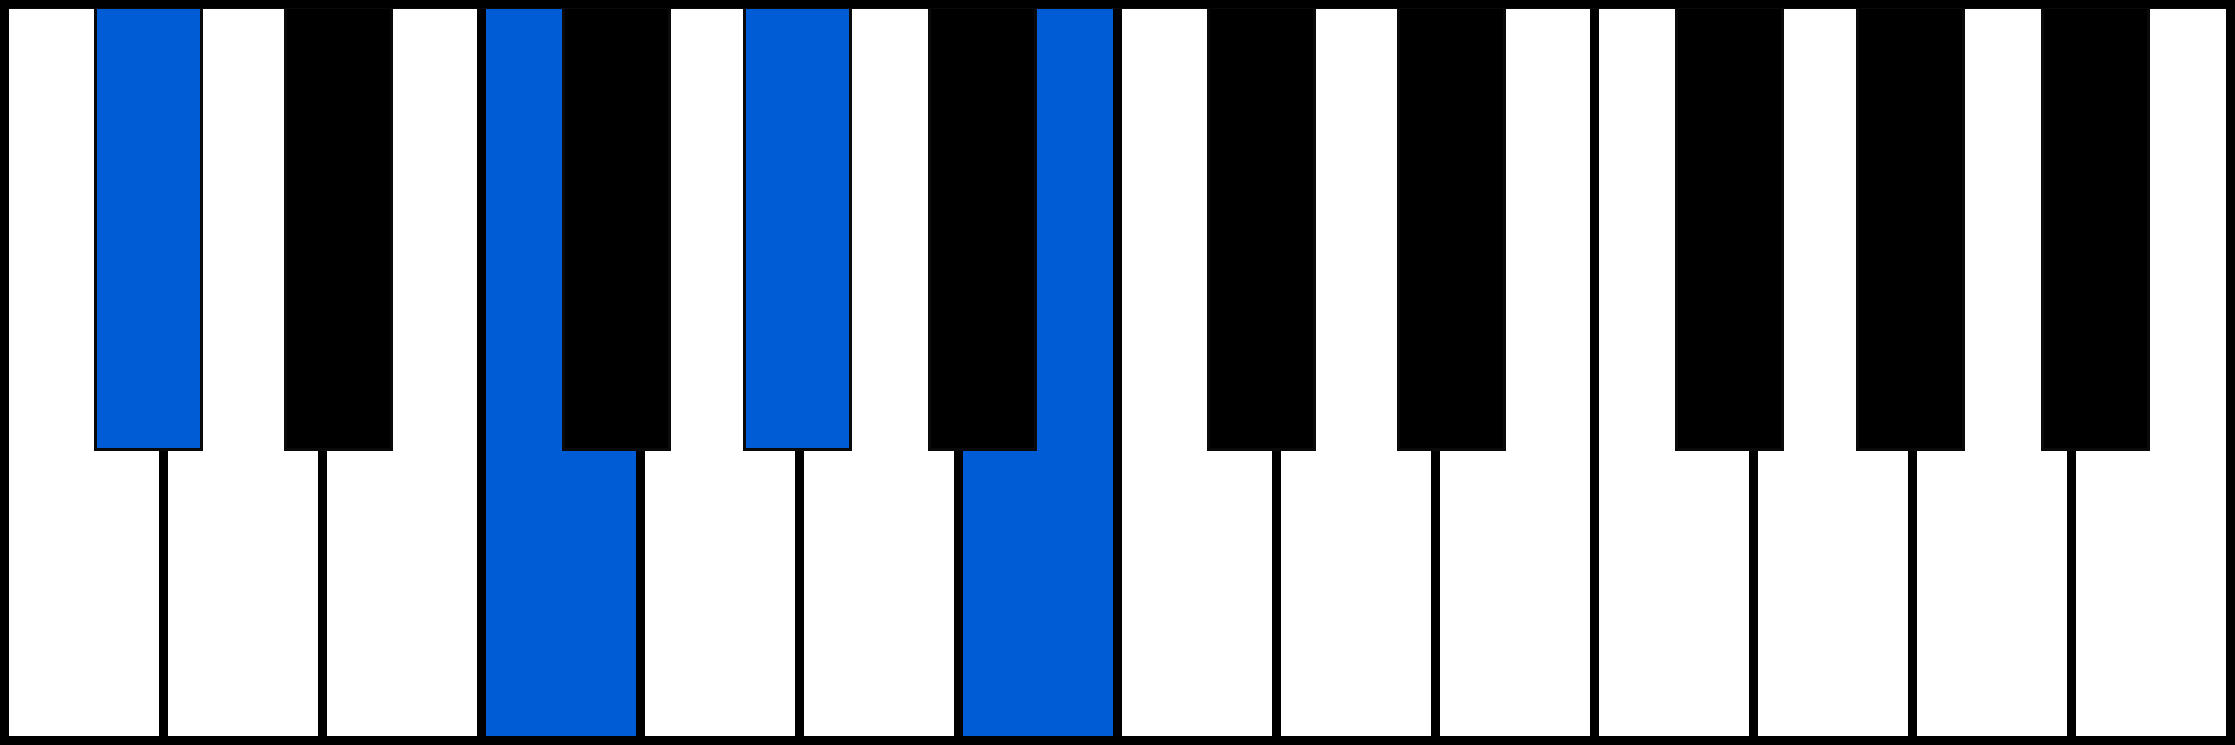 C#7 piano chord fingering